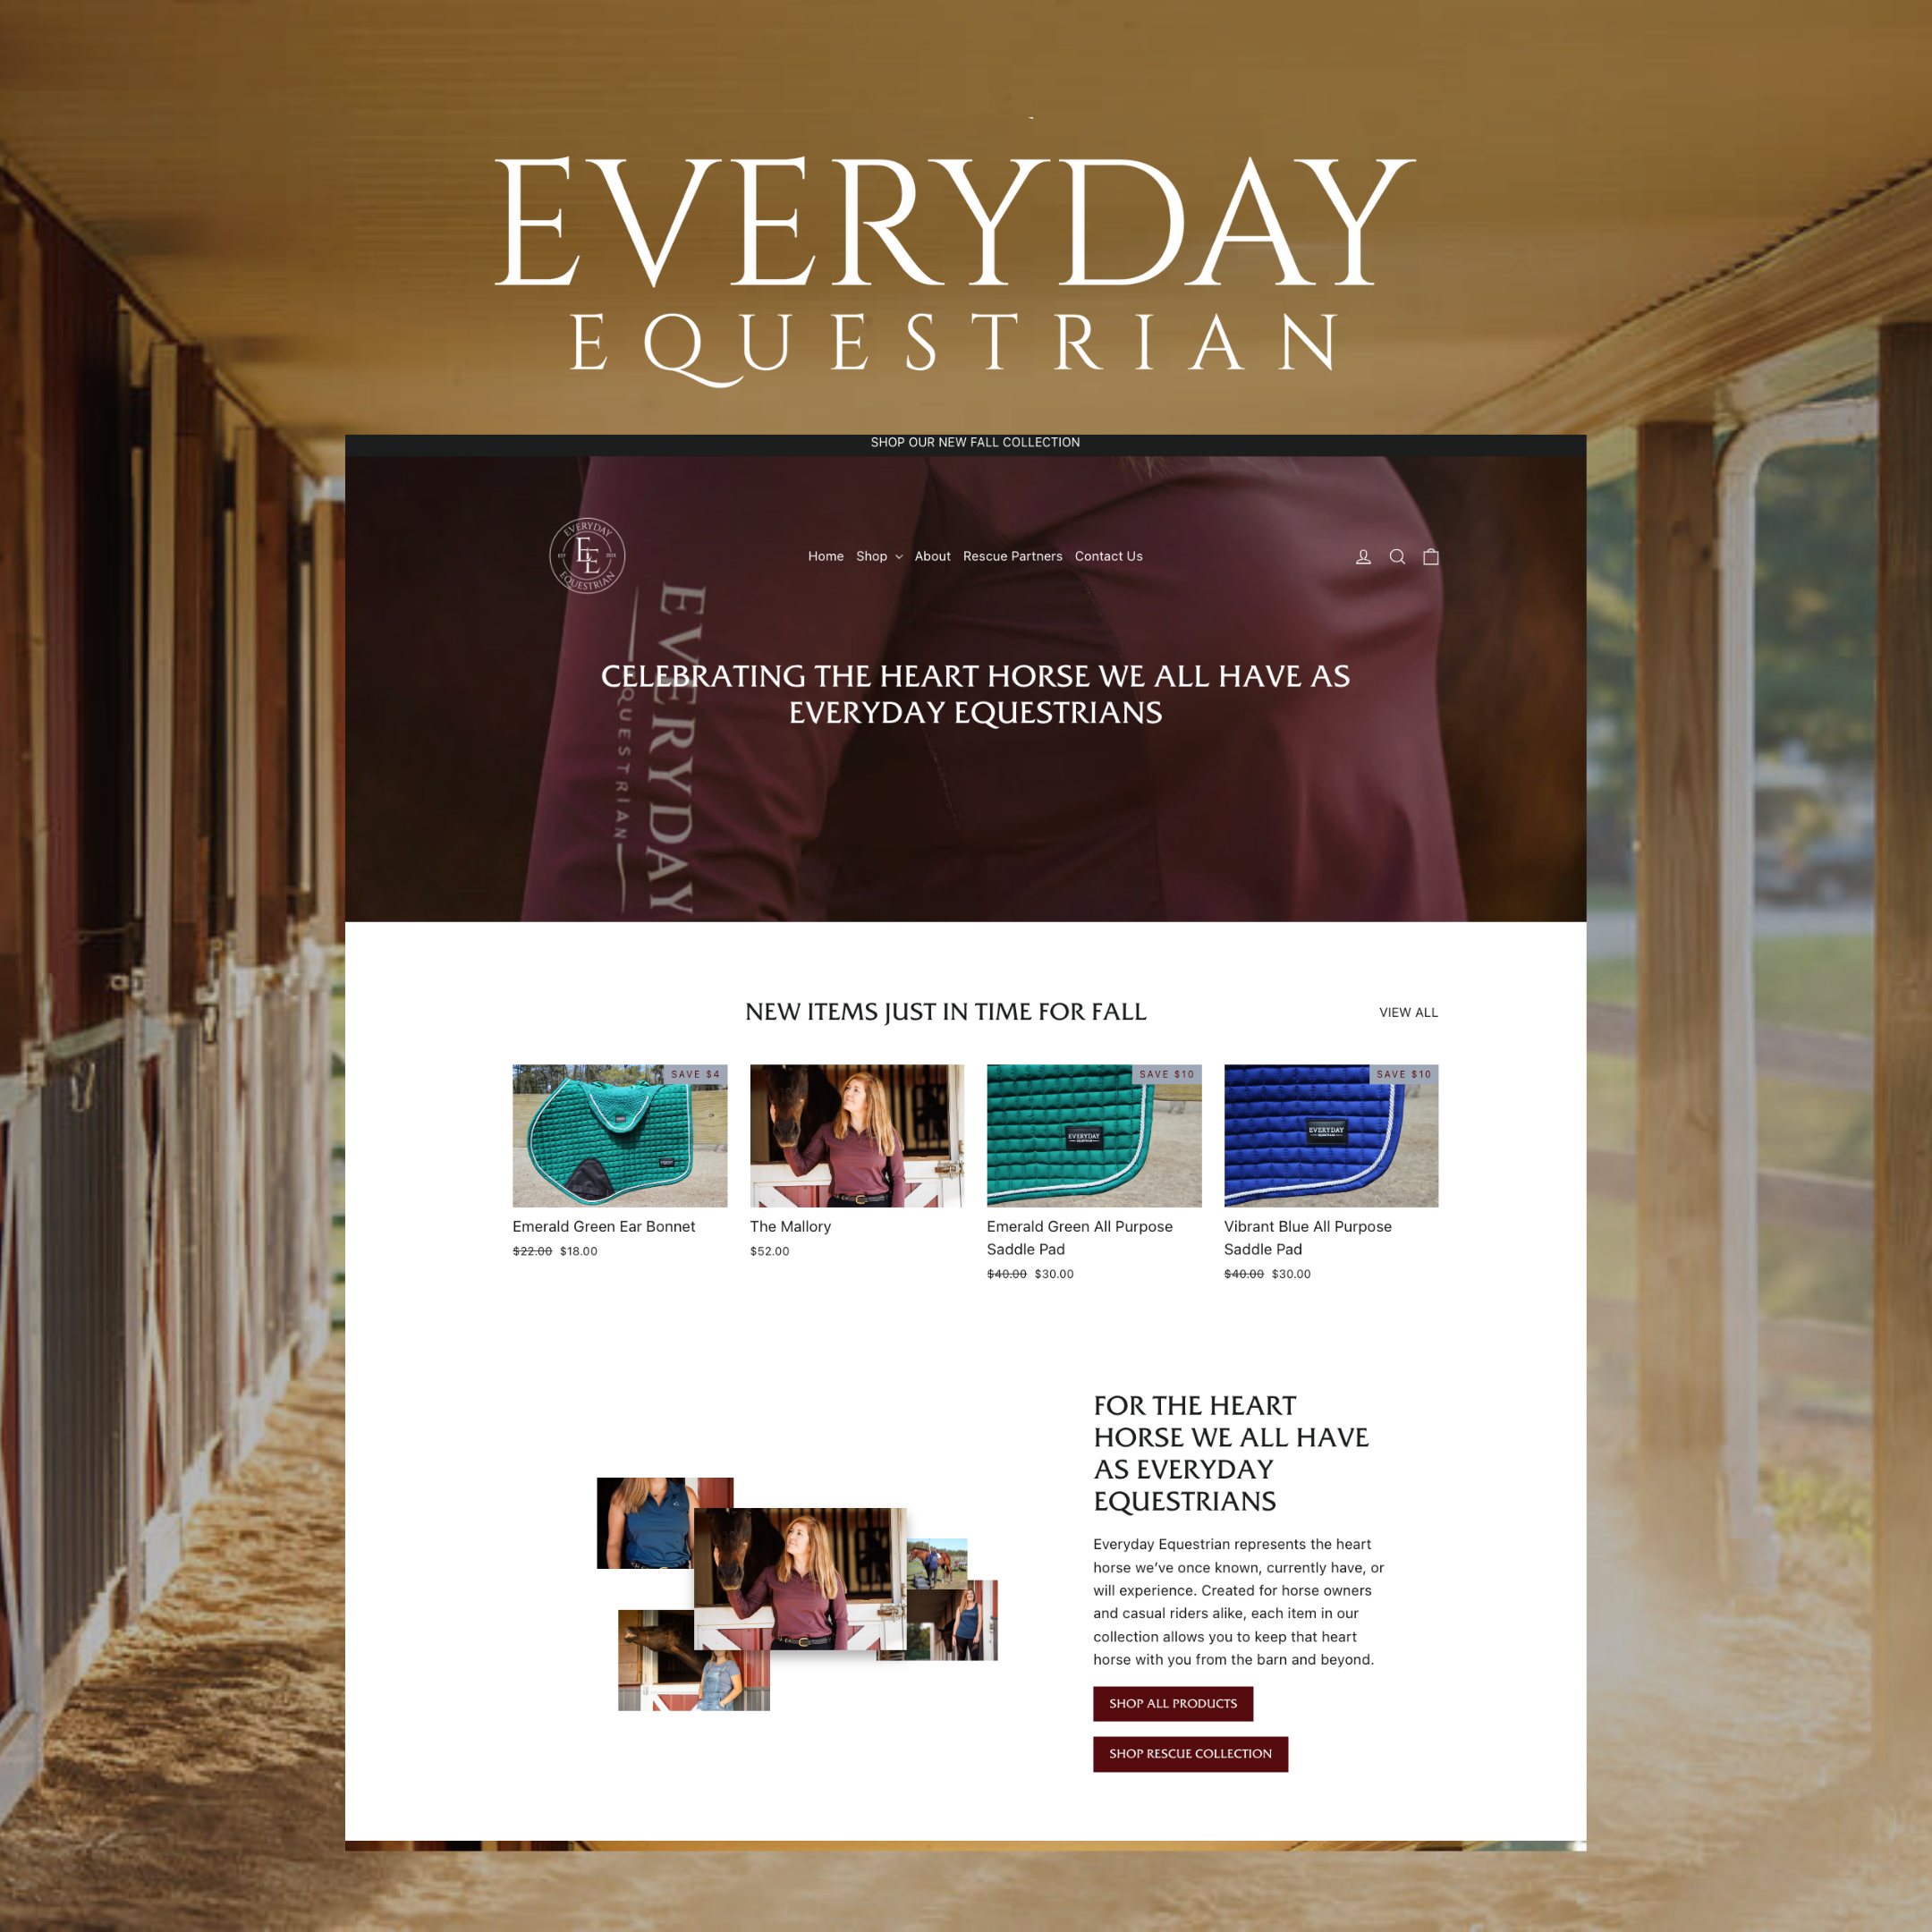 Brand and website design for equestrian brand, Everyday Equestrian